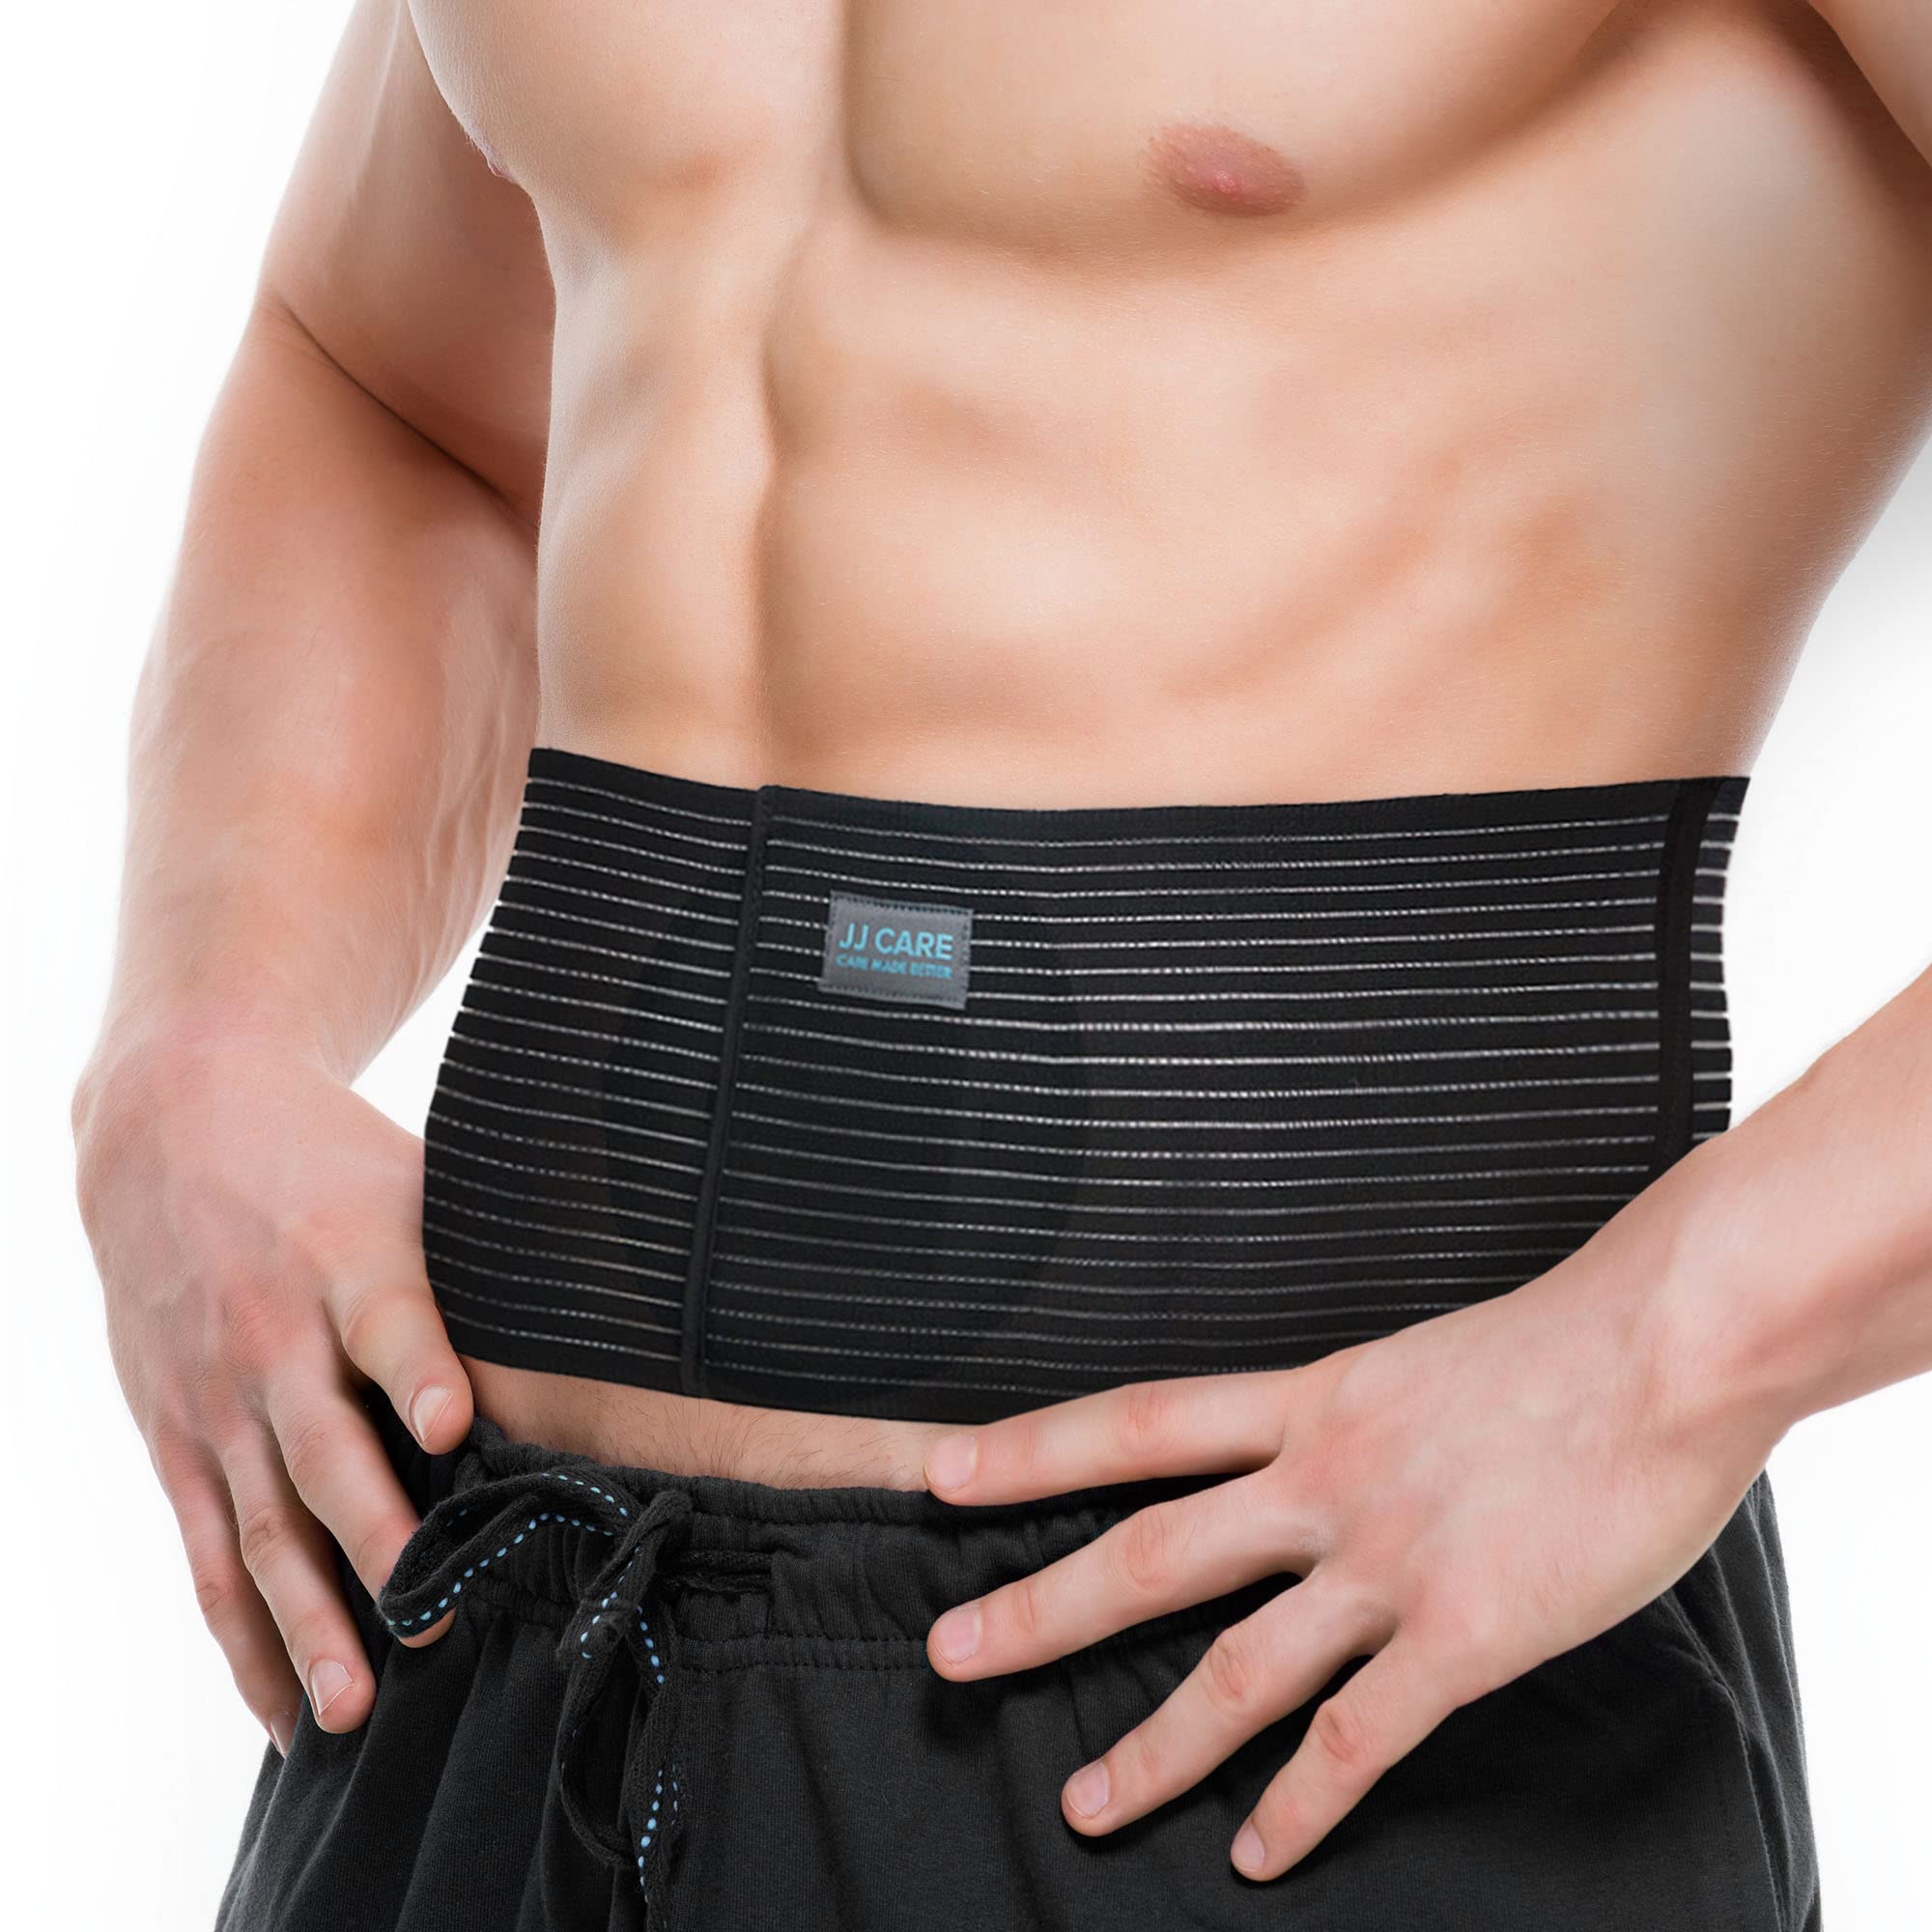 Umbilical Hernia Belt | Abdominal Hernia Belt for Men & Women | Belly  Button Umbilical Hernia Binder w/ 1 Hernia Compression Pads | Ventral